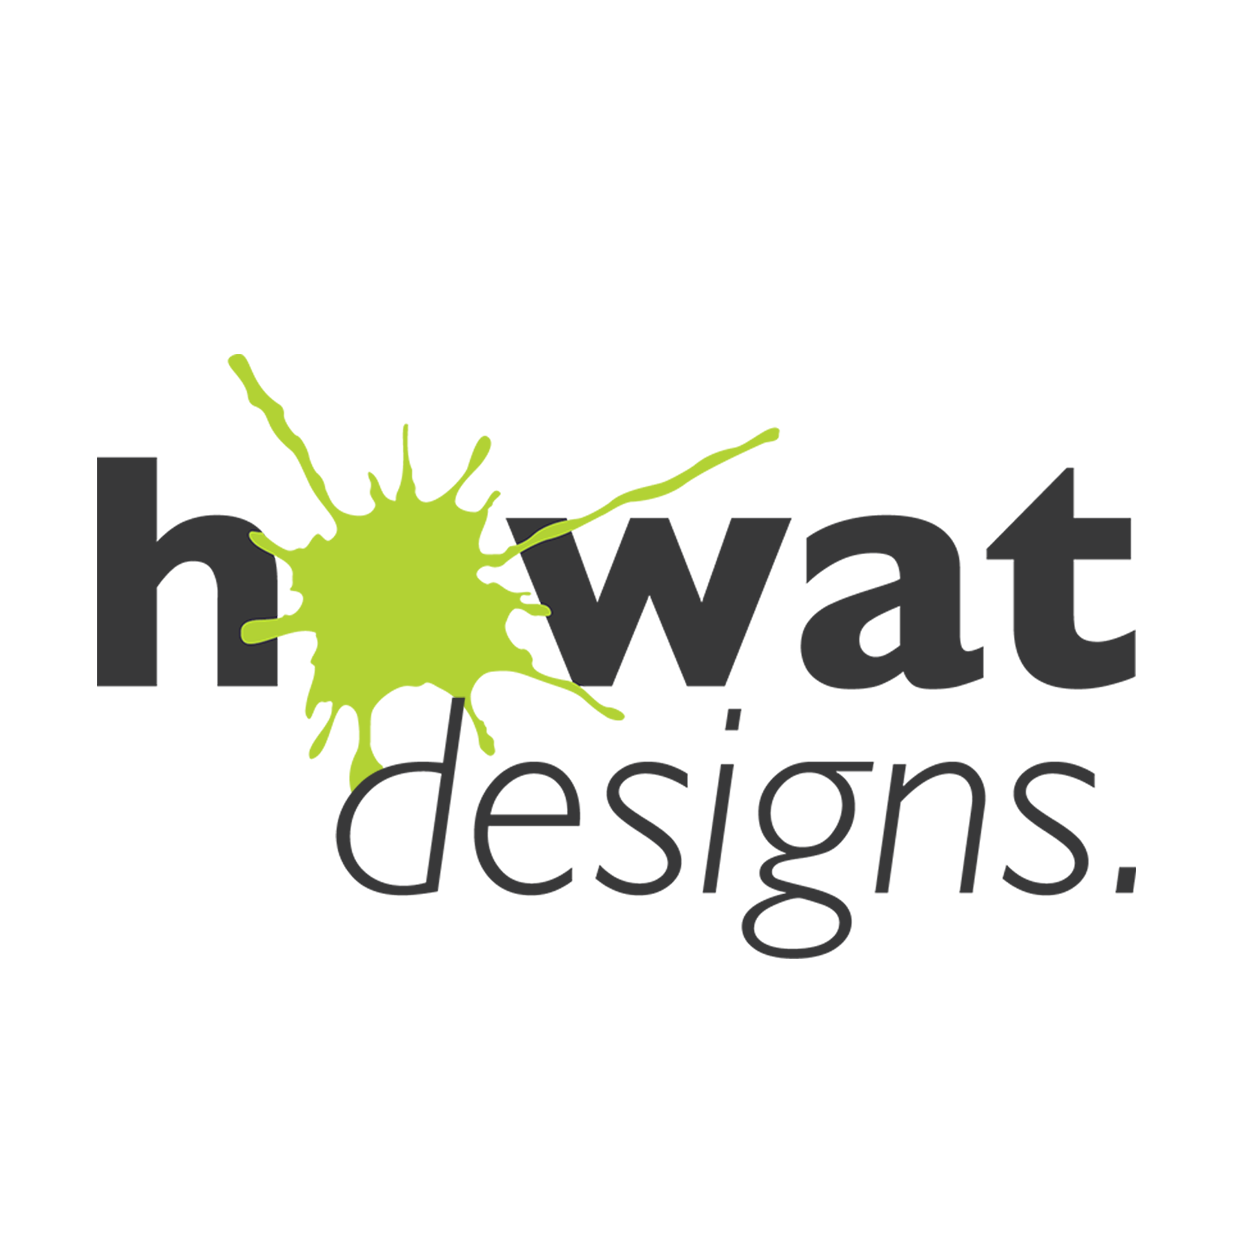 Logo of howatdesigns Graphic Designers In Dundee, Angus